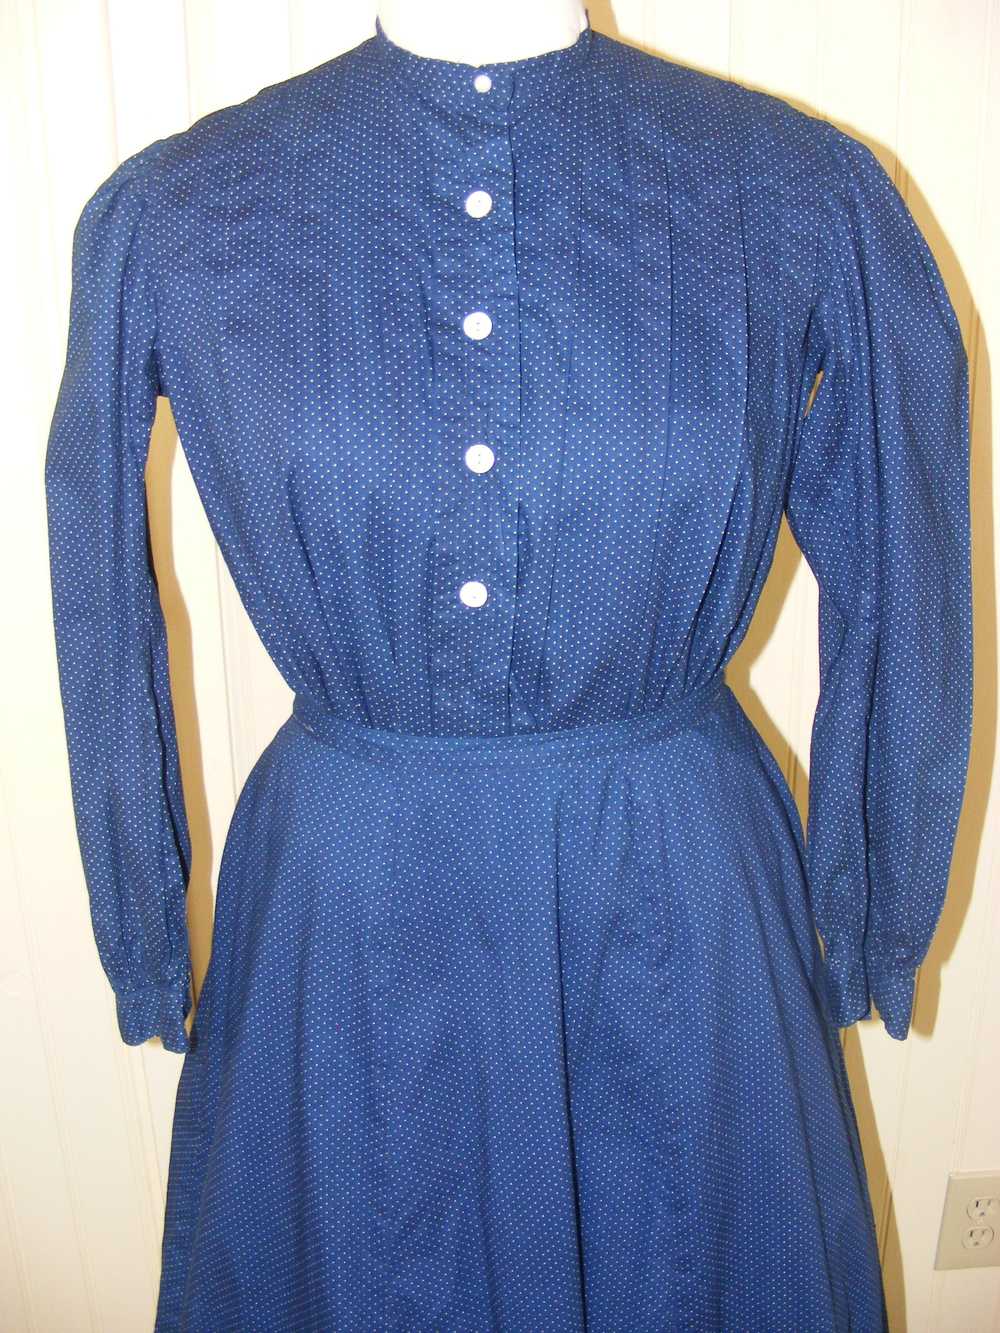 Victorian 1890s 2pc Dress Indigo Cotton Polka Dots - image 1